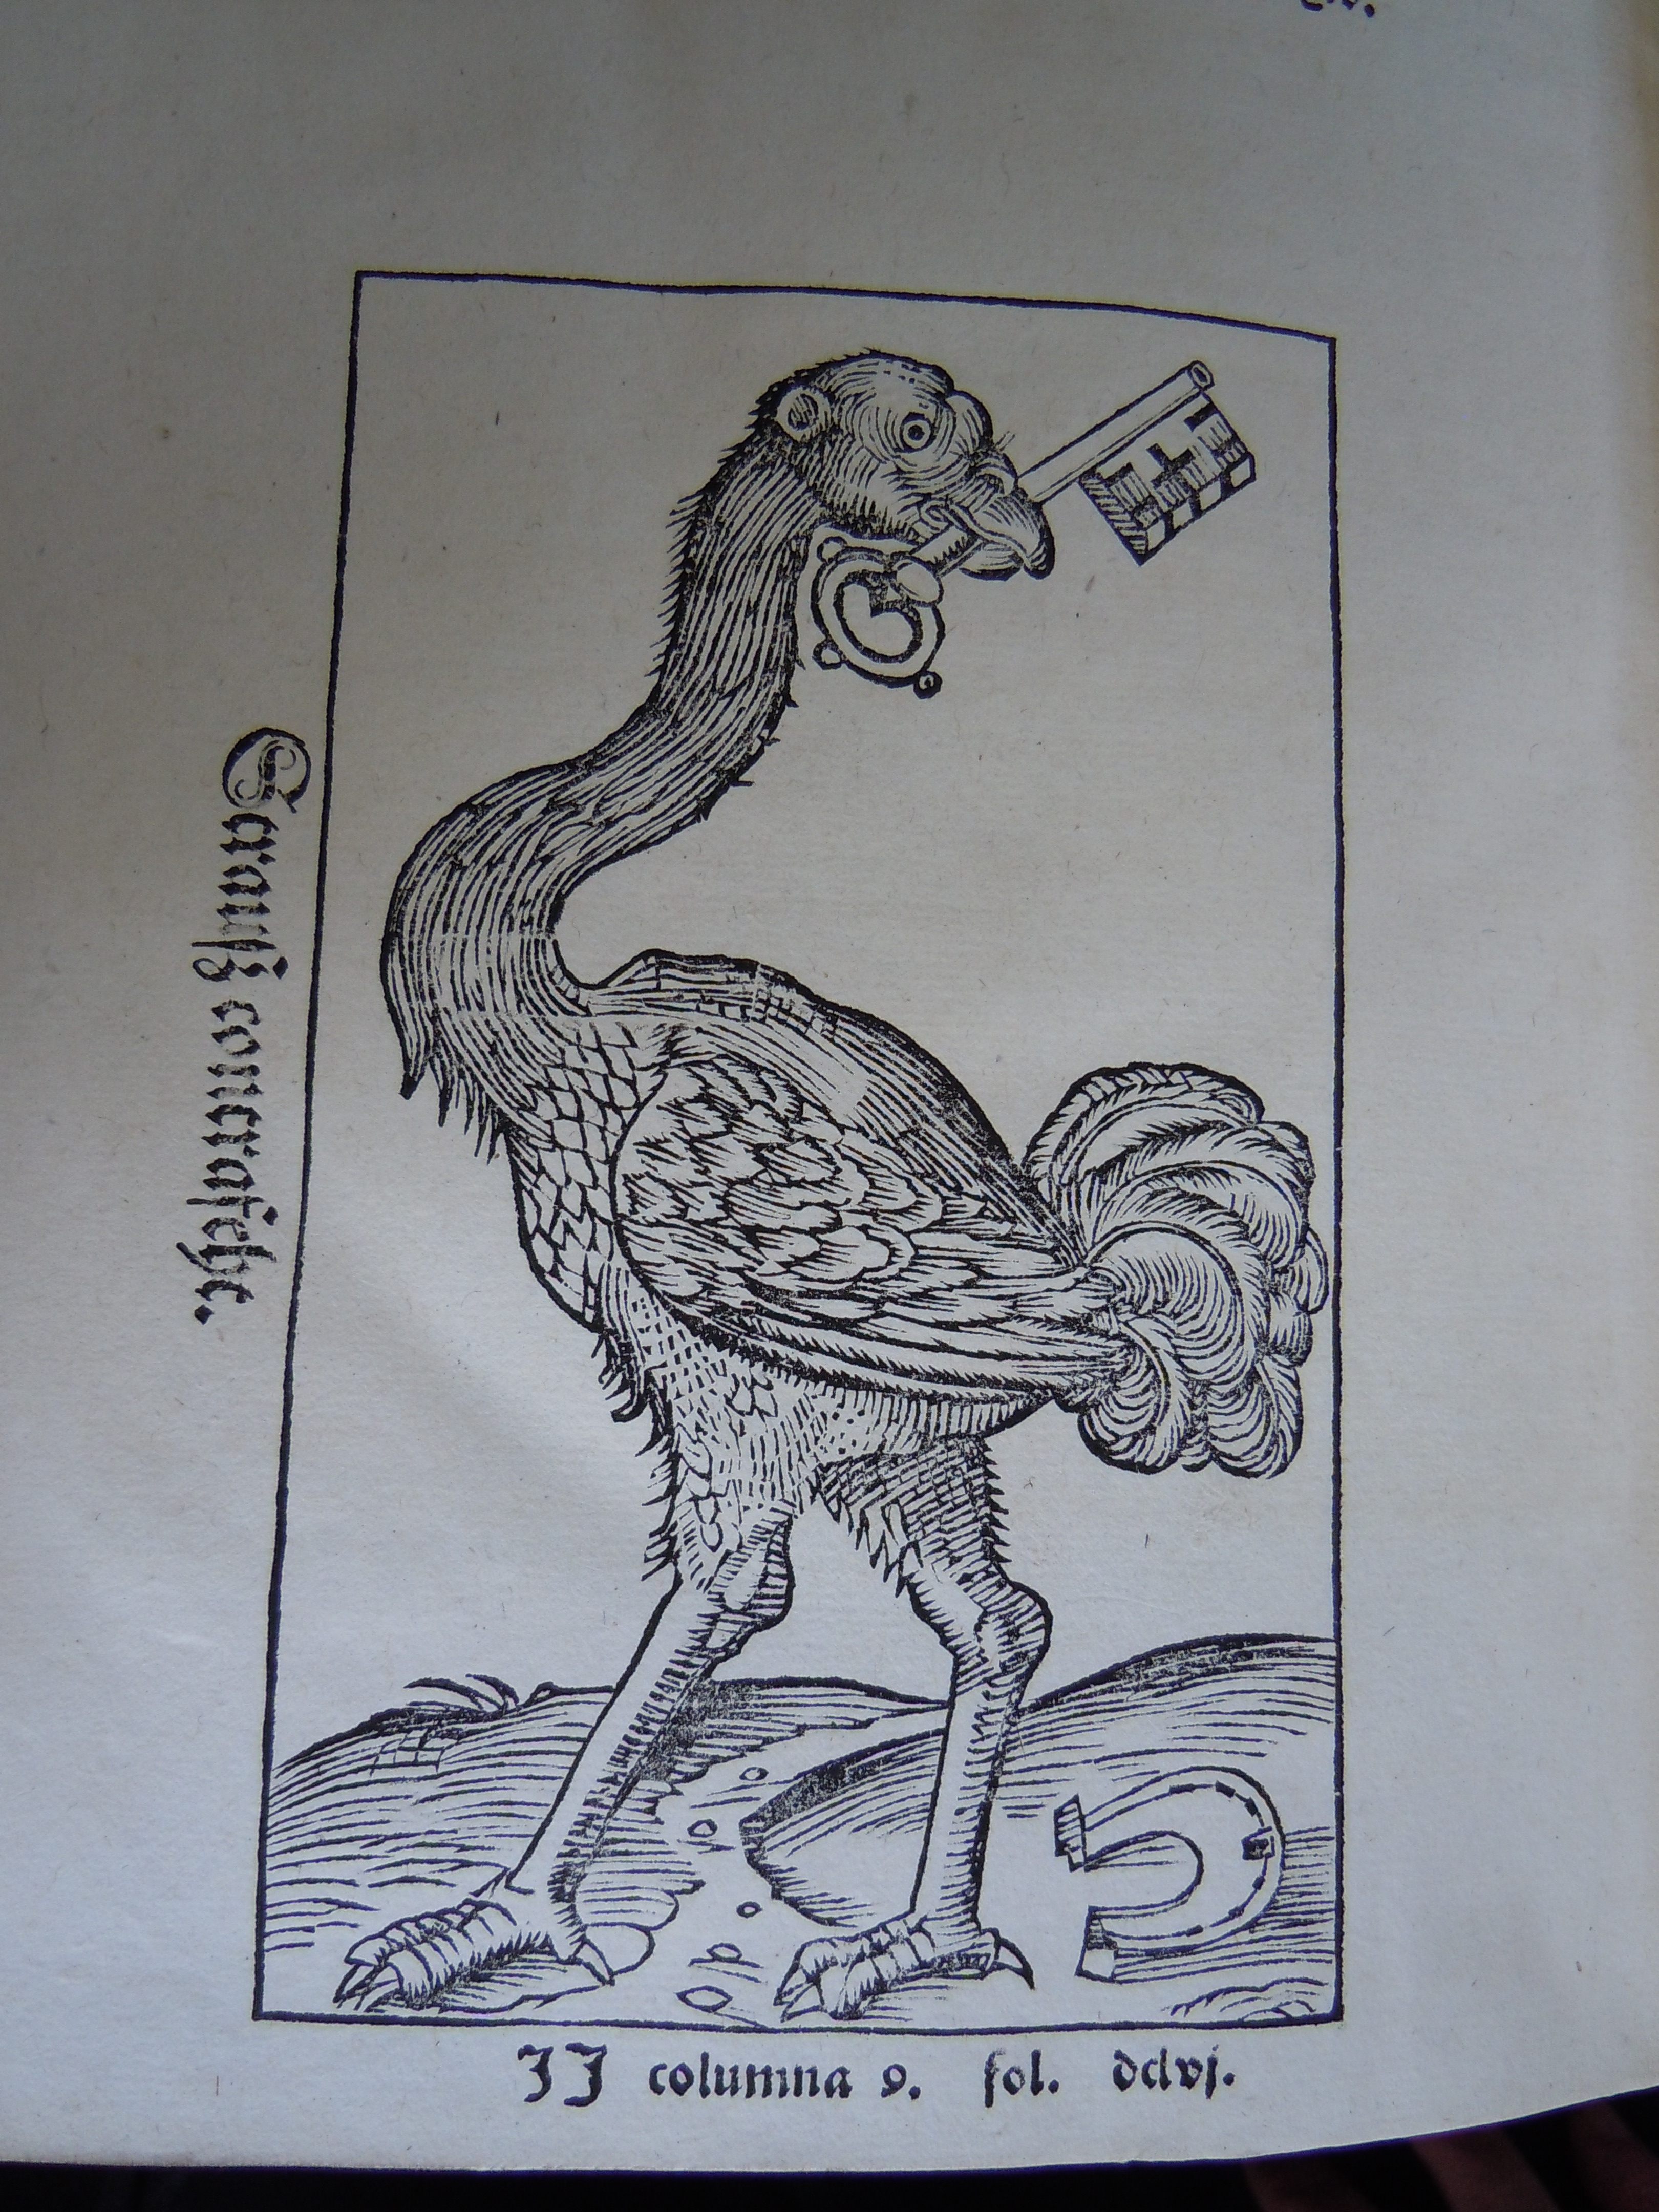 BT3.187.1(2), opp. p. dcxxxi, Sebastian M眉nster鈥檚 Cosmographia (1544)